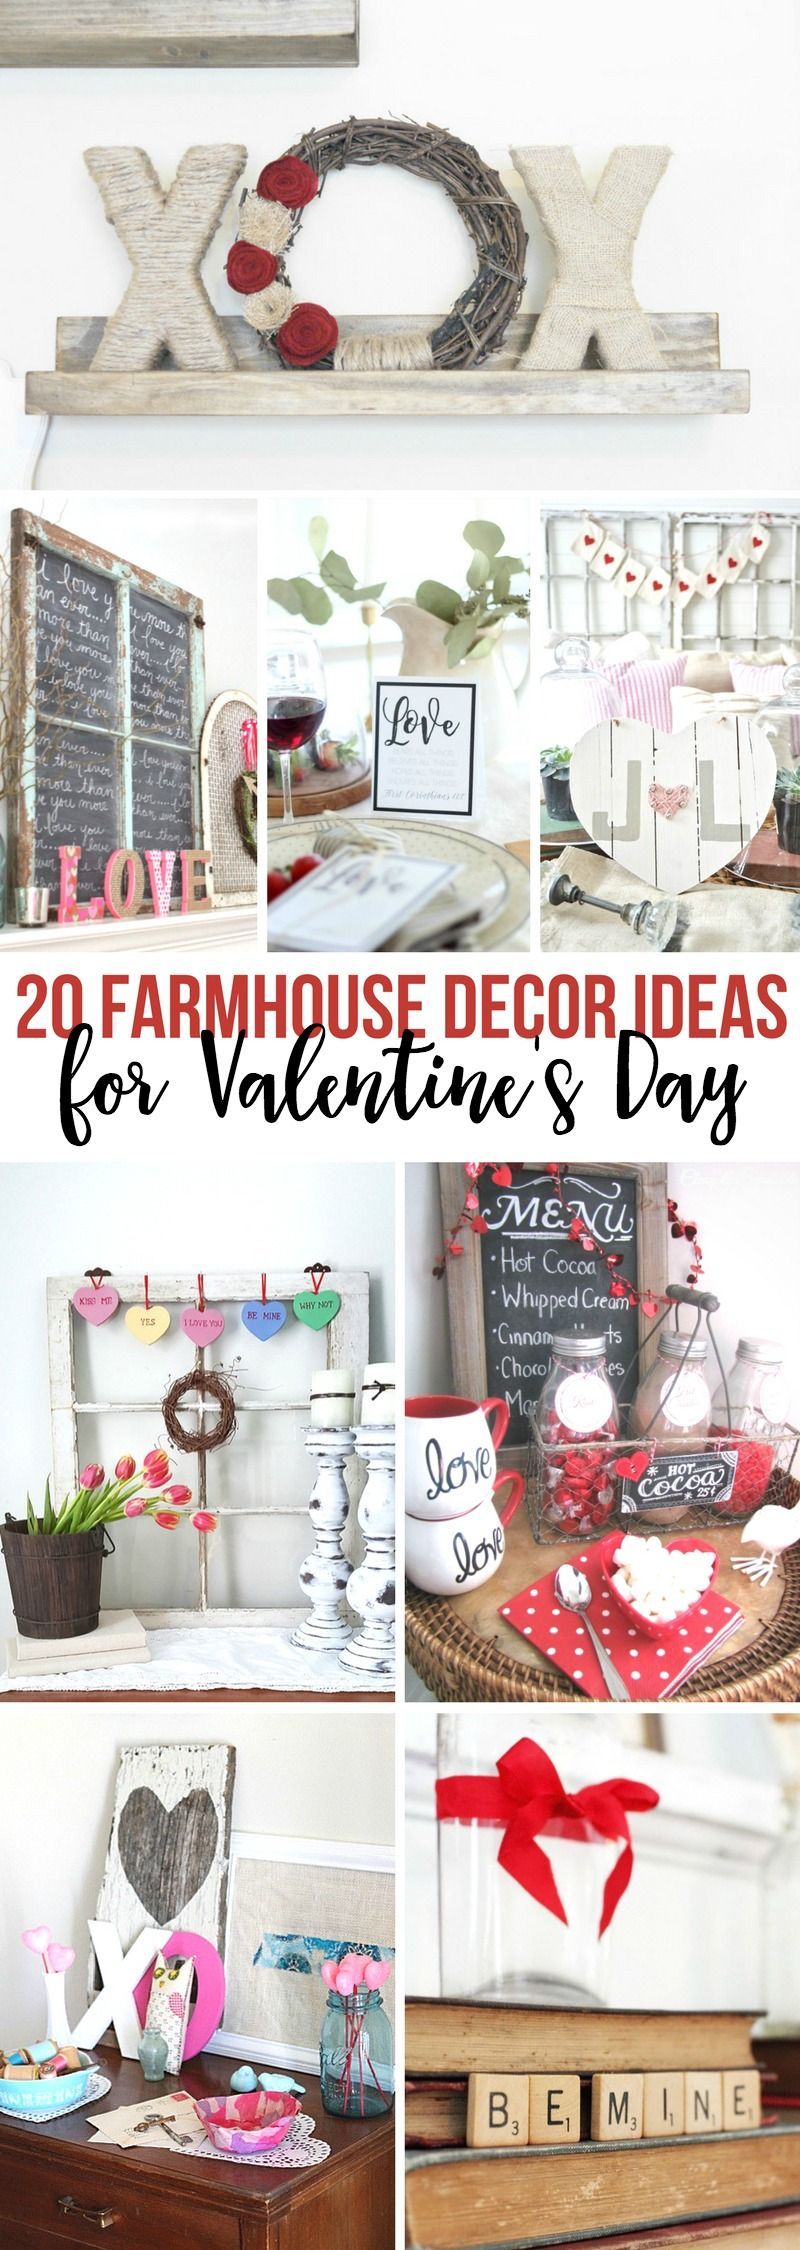 20 Farmhouse Ideas for Valentine's Day | Yesterday On Tuesday - 20 Farmhouse Ideas for Valentine's Day | Yesterday On Tuesday -   18 diy valentines decorations farmhouse ideas